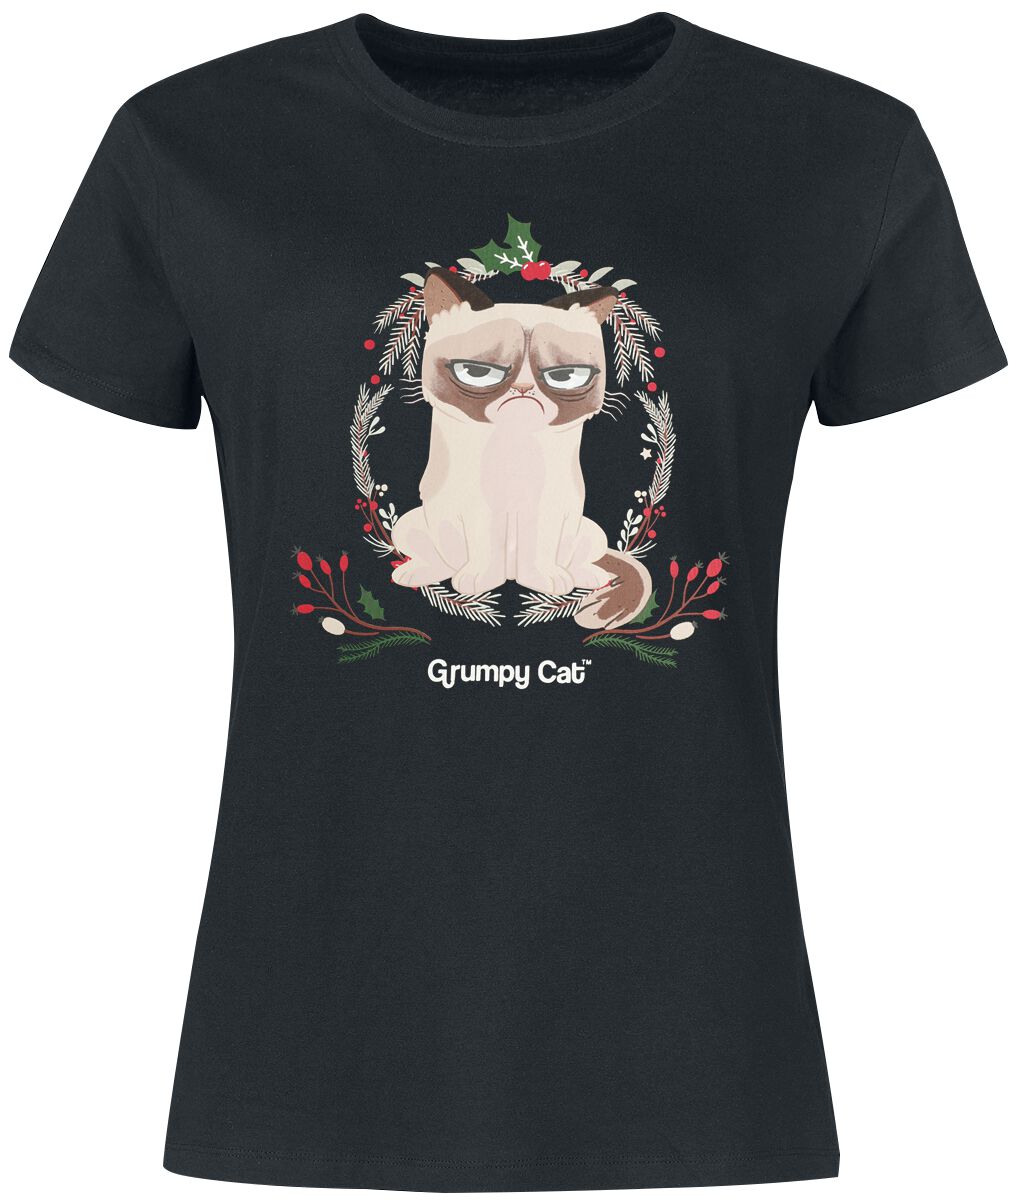 Grumpy Cat Grumpy Christmas T-Shirt schwarz in M